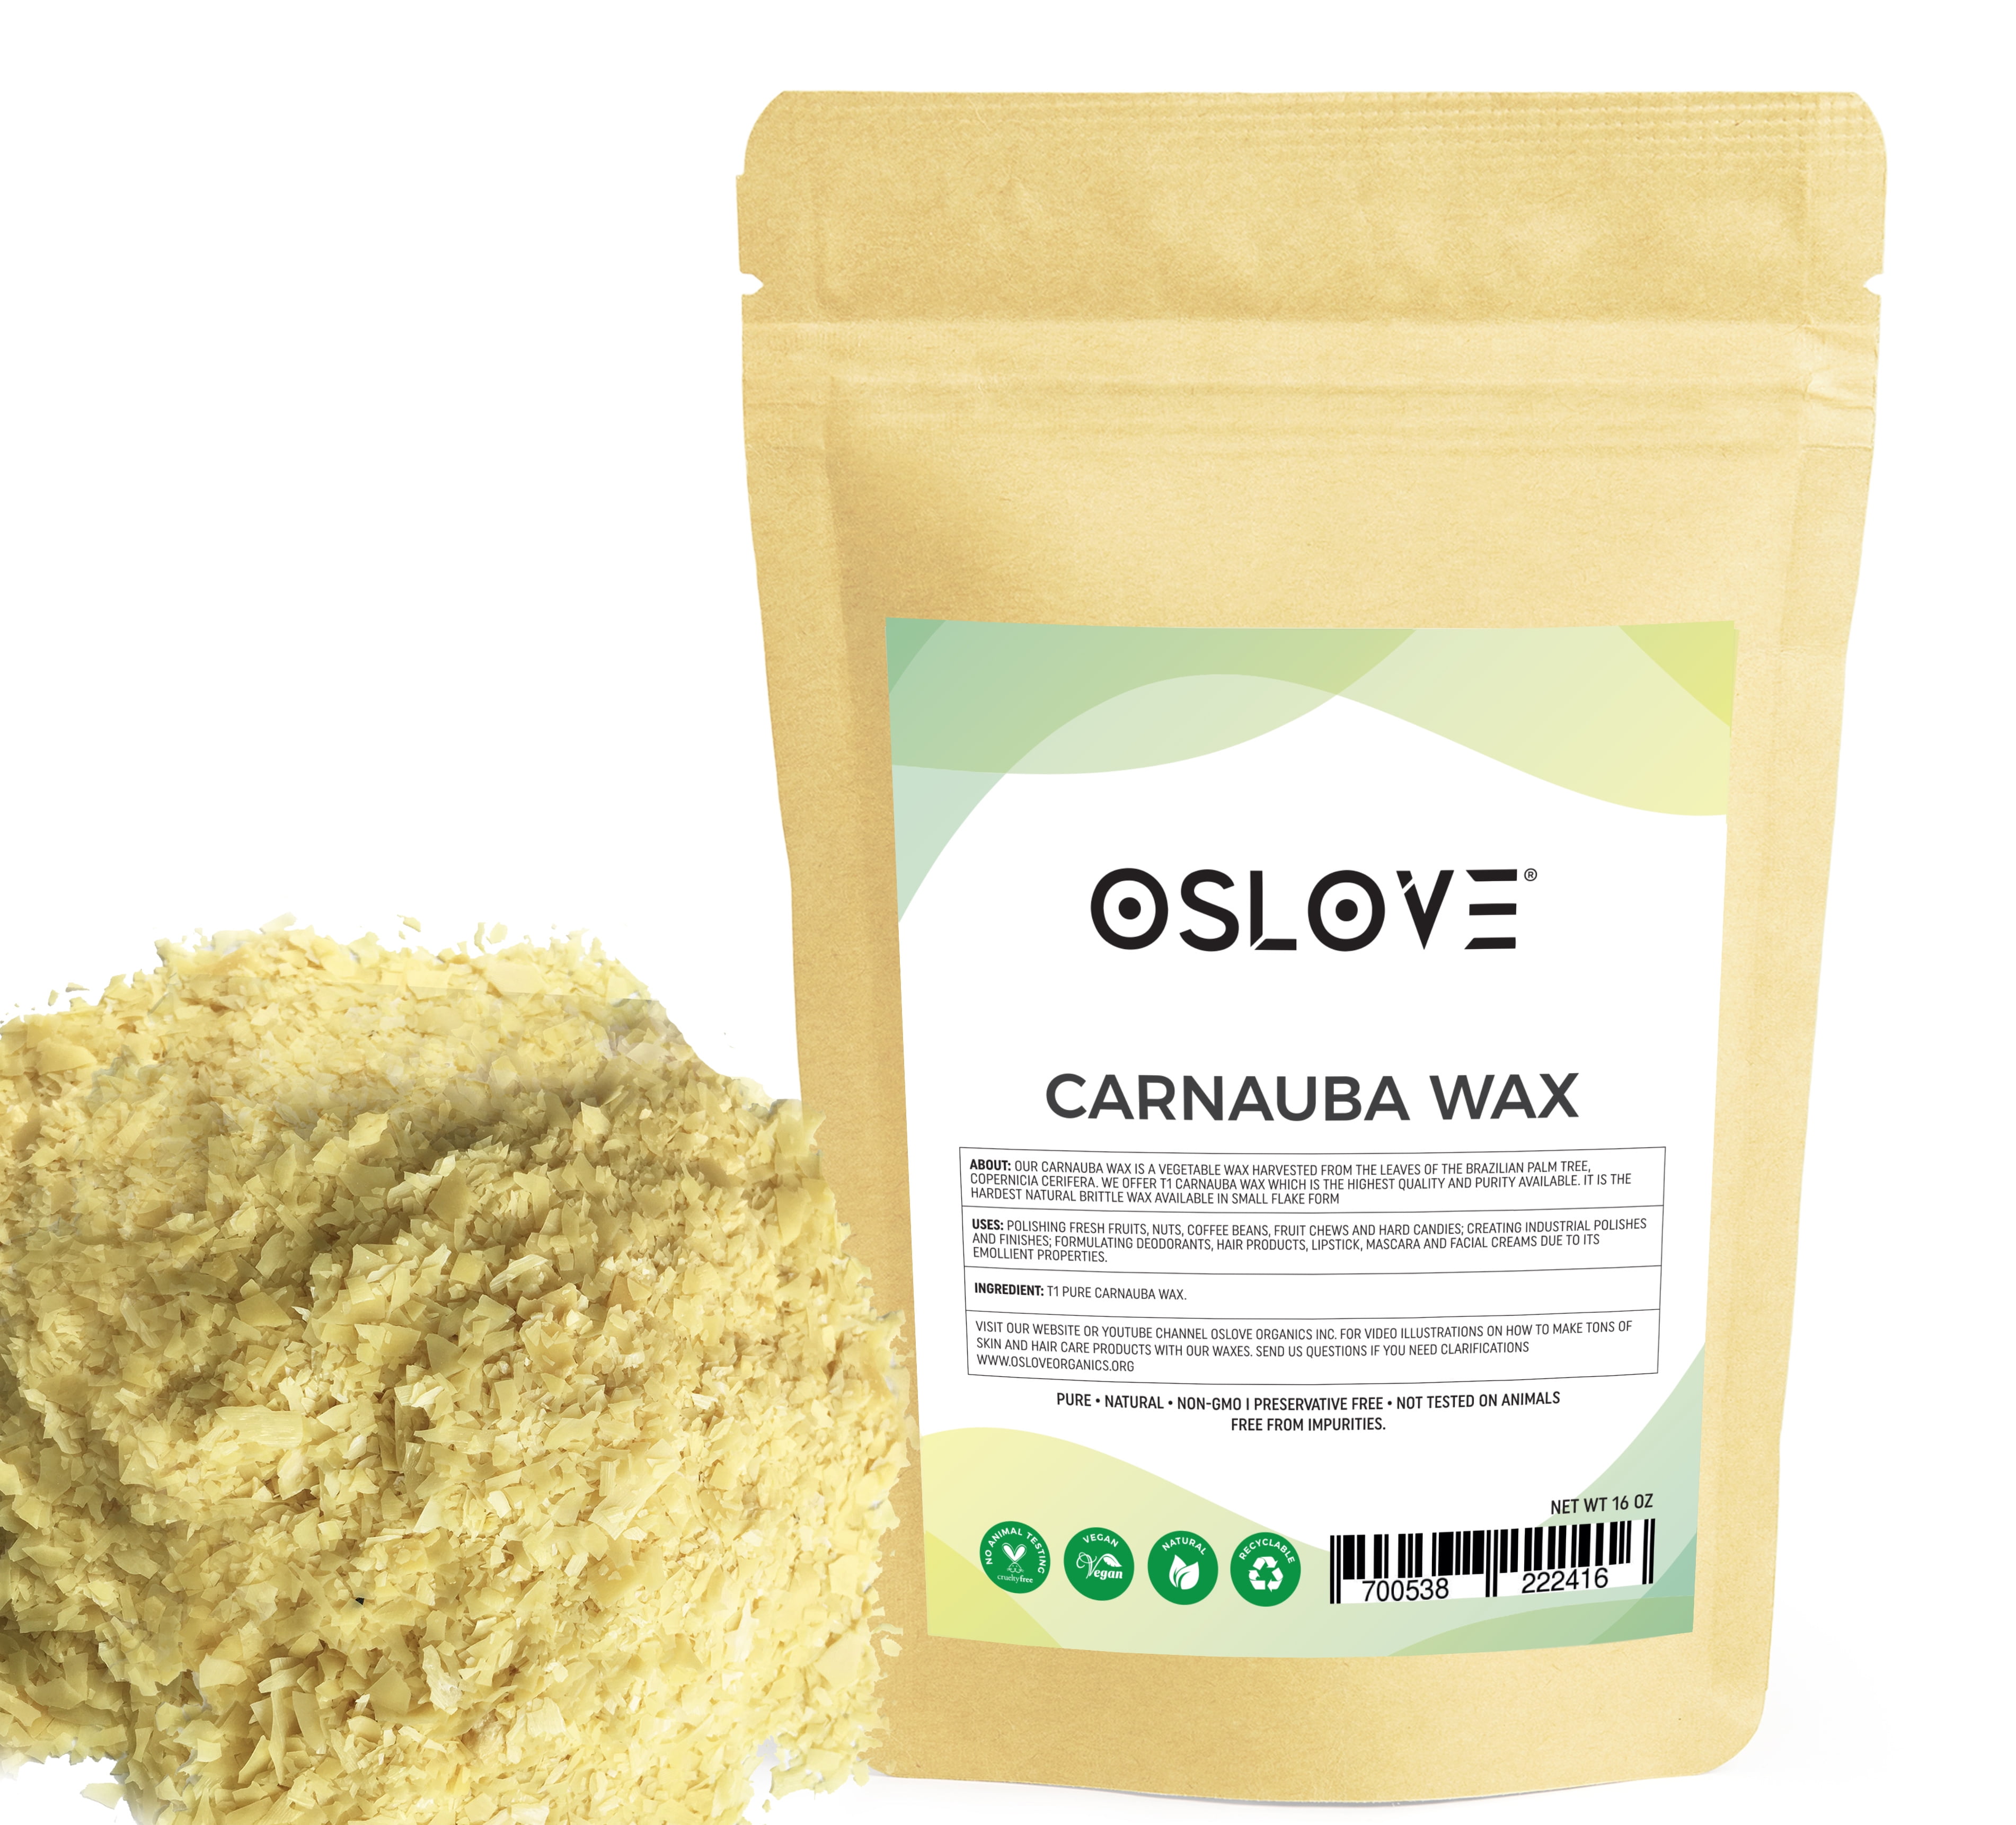 Better Shea Butter Organic Carnauba Wax Flakes 1 lb - Food Grade, Vegan - Use for Wood Finish, Skin